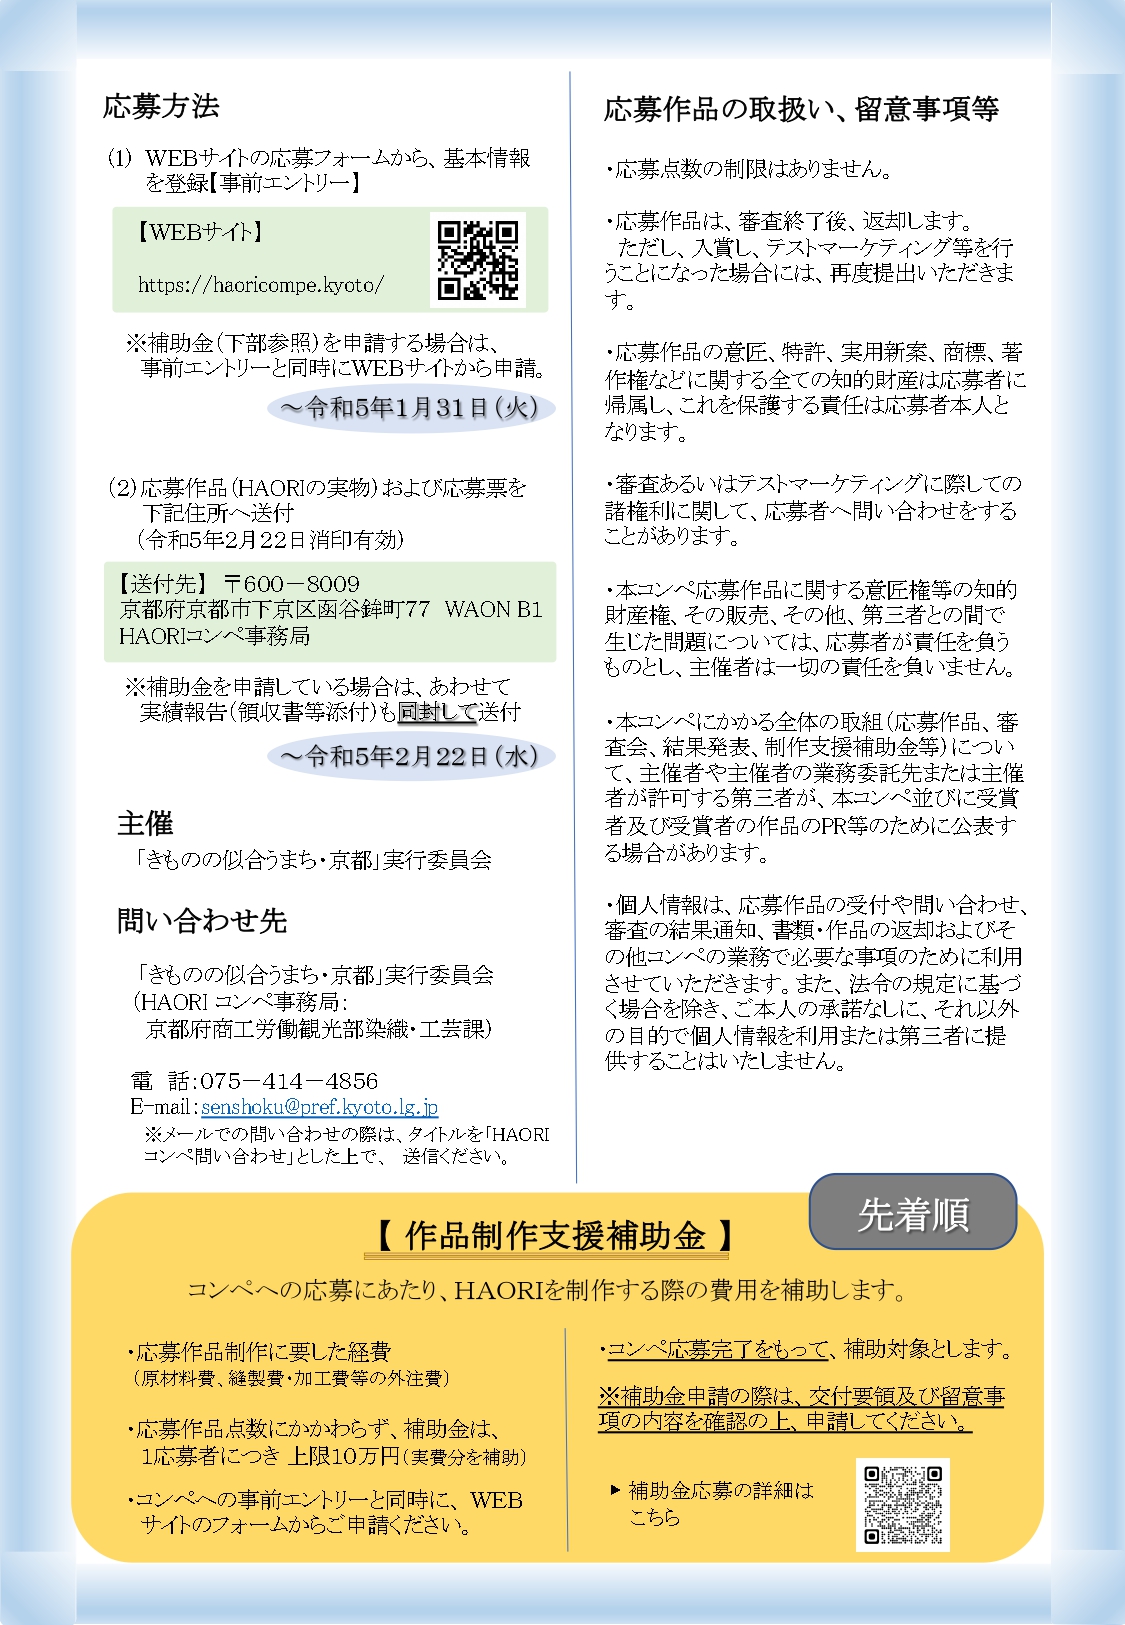 「KYOTO HAORI コンペティション」開催のお知らせ(事前エントリー1/31迄)